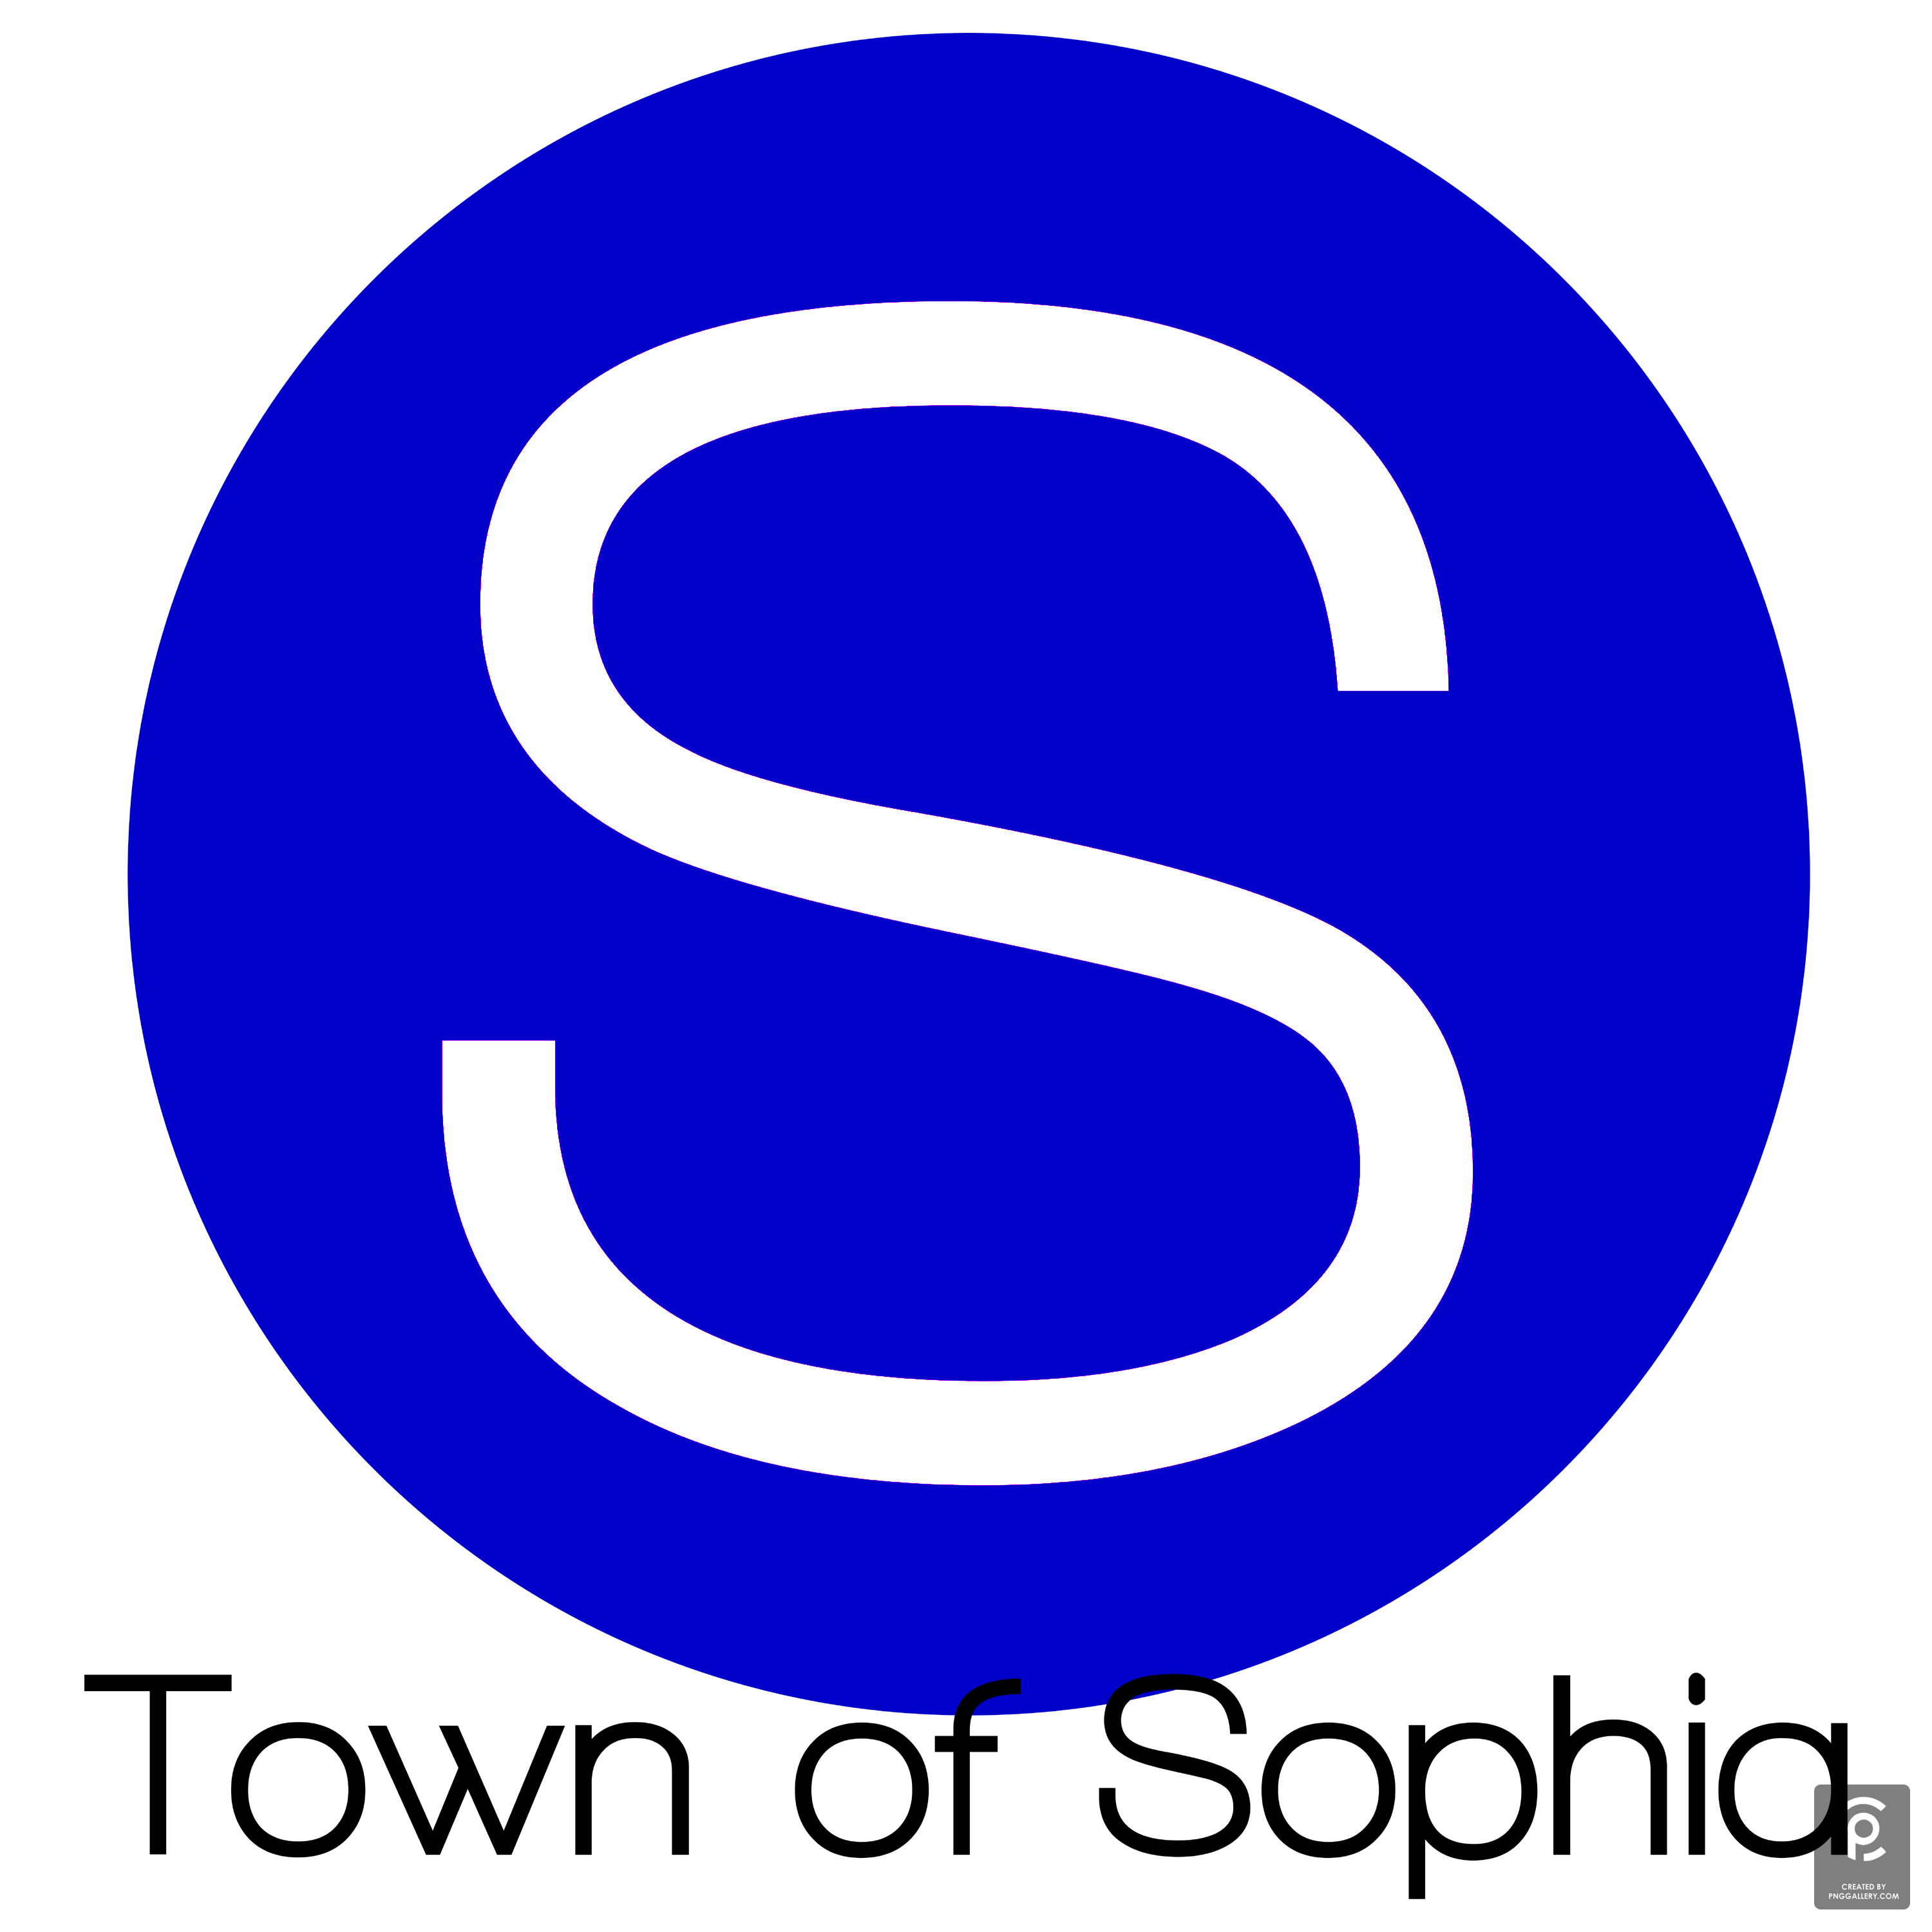 Sophia West Virginia Logo Transparent Gallery